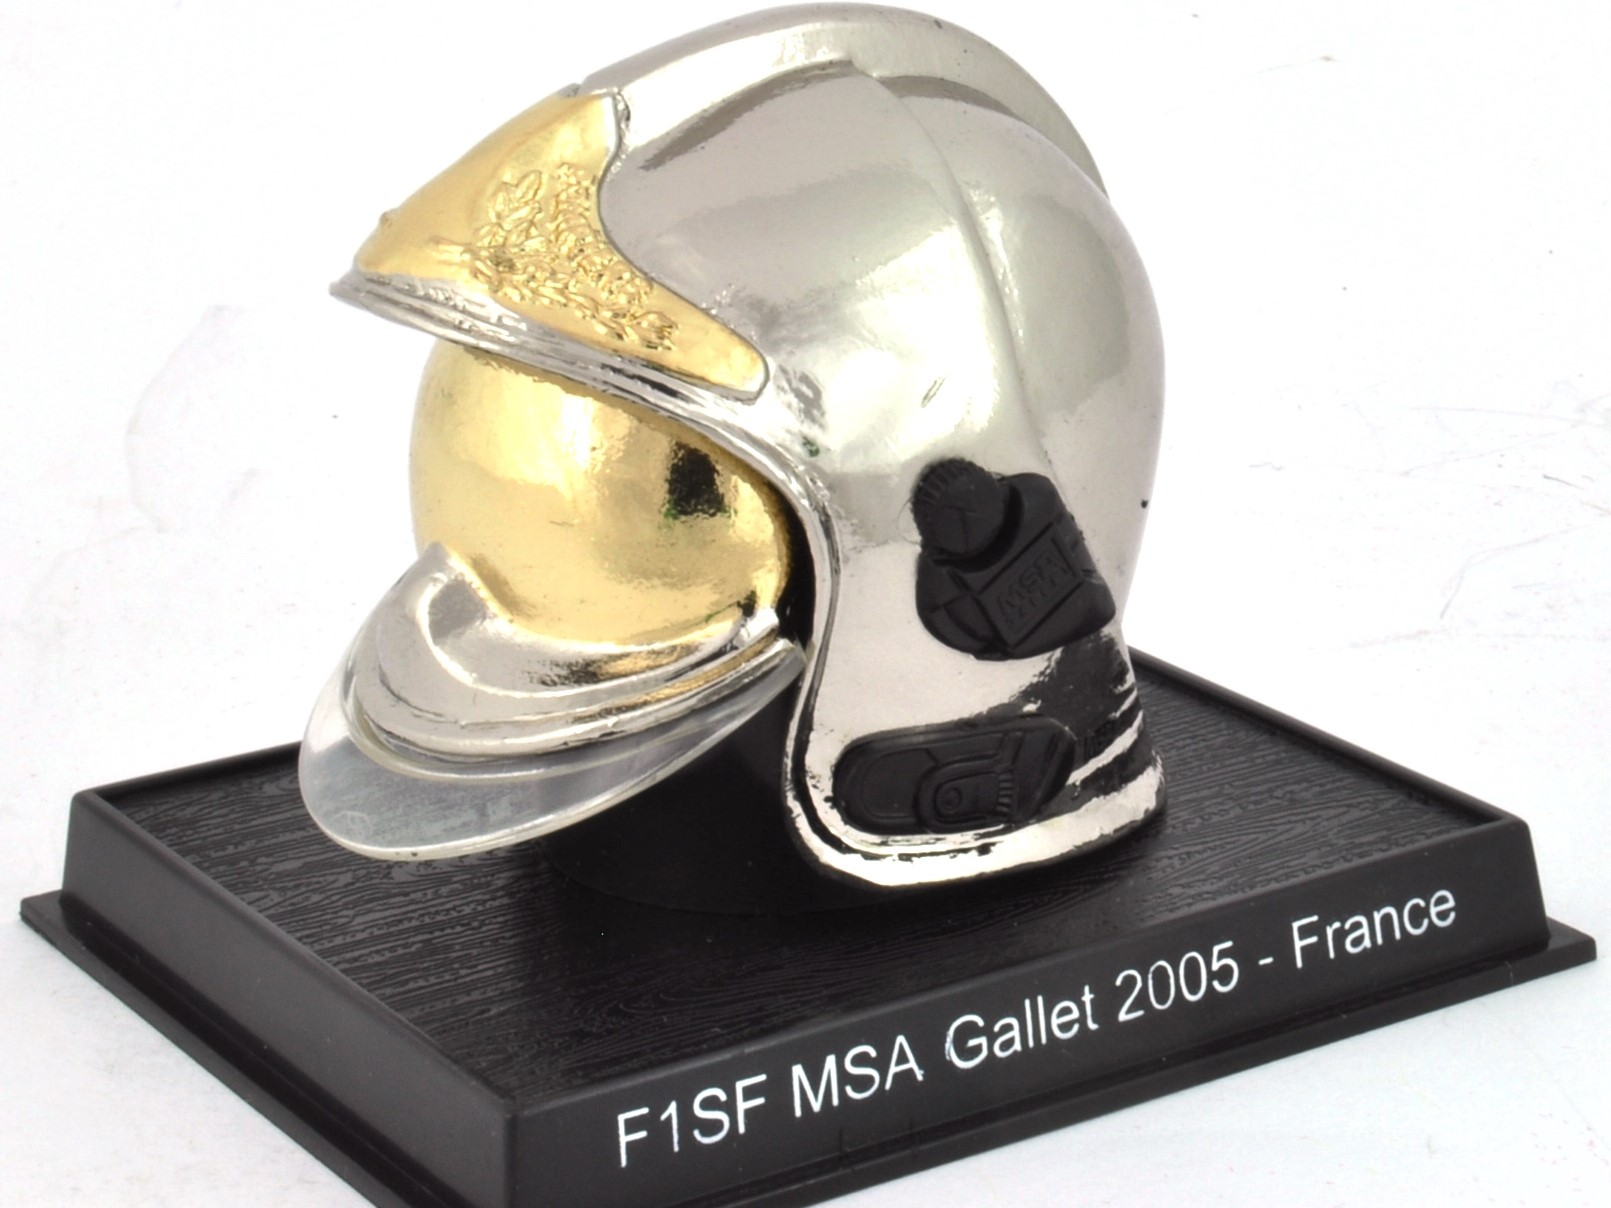 F1SF MSA Gallet - 2005 - France